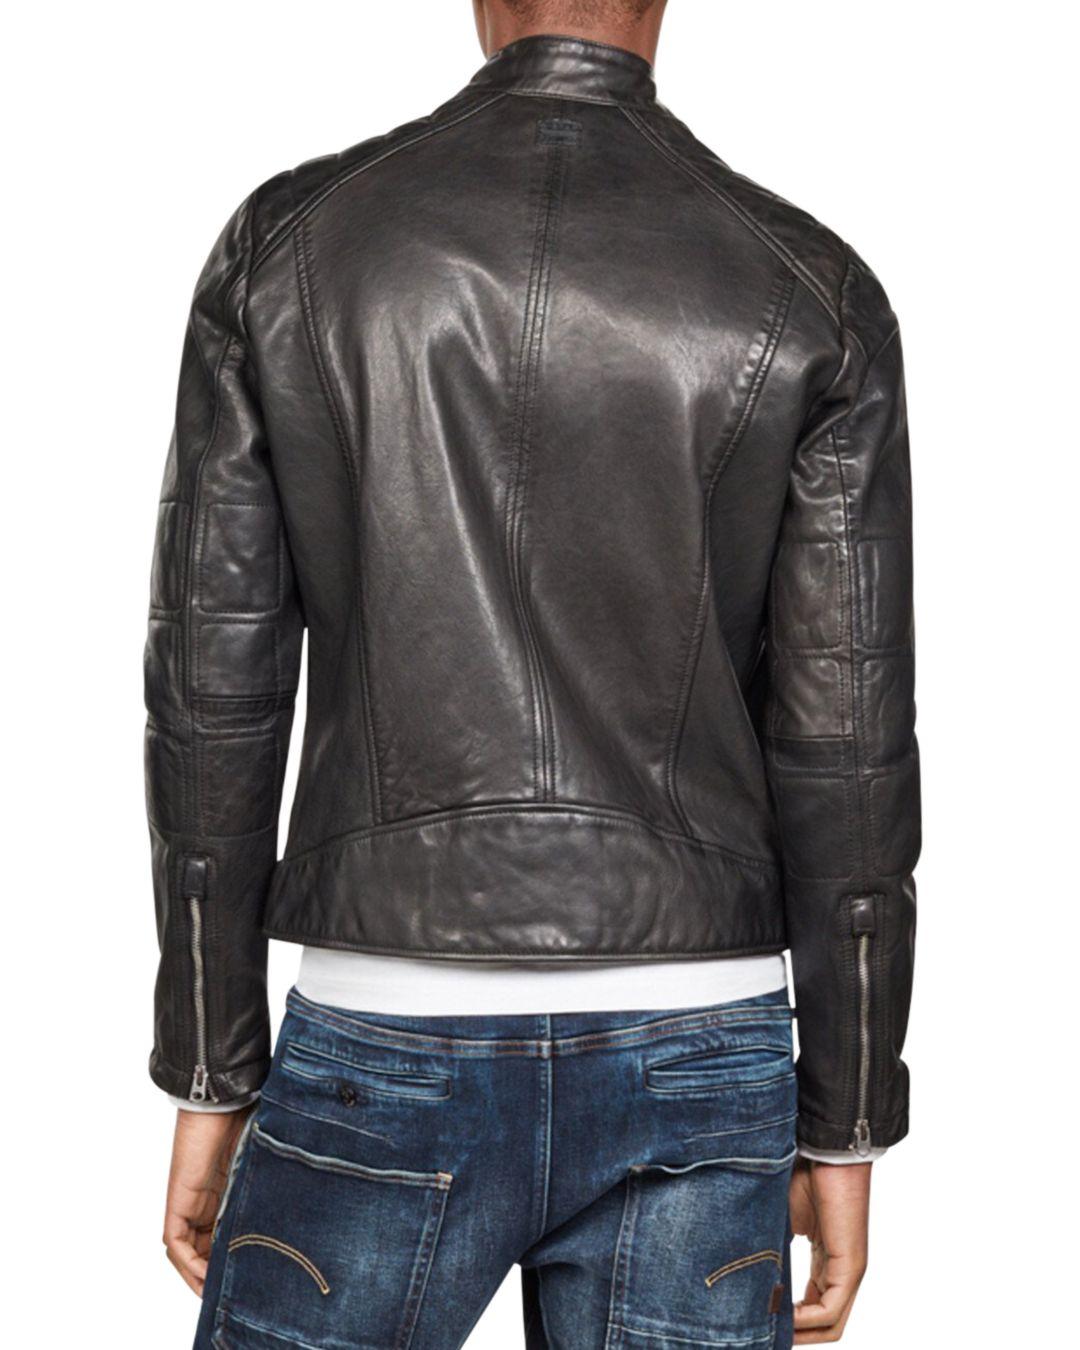 G-Star RAW G - Star Raw Suzuki Slim Fit Leather Moto Jacket in Black for  Men - Lyst